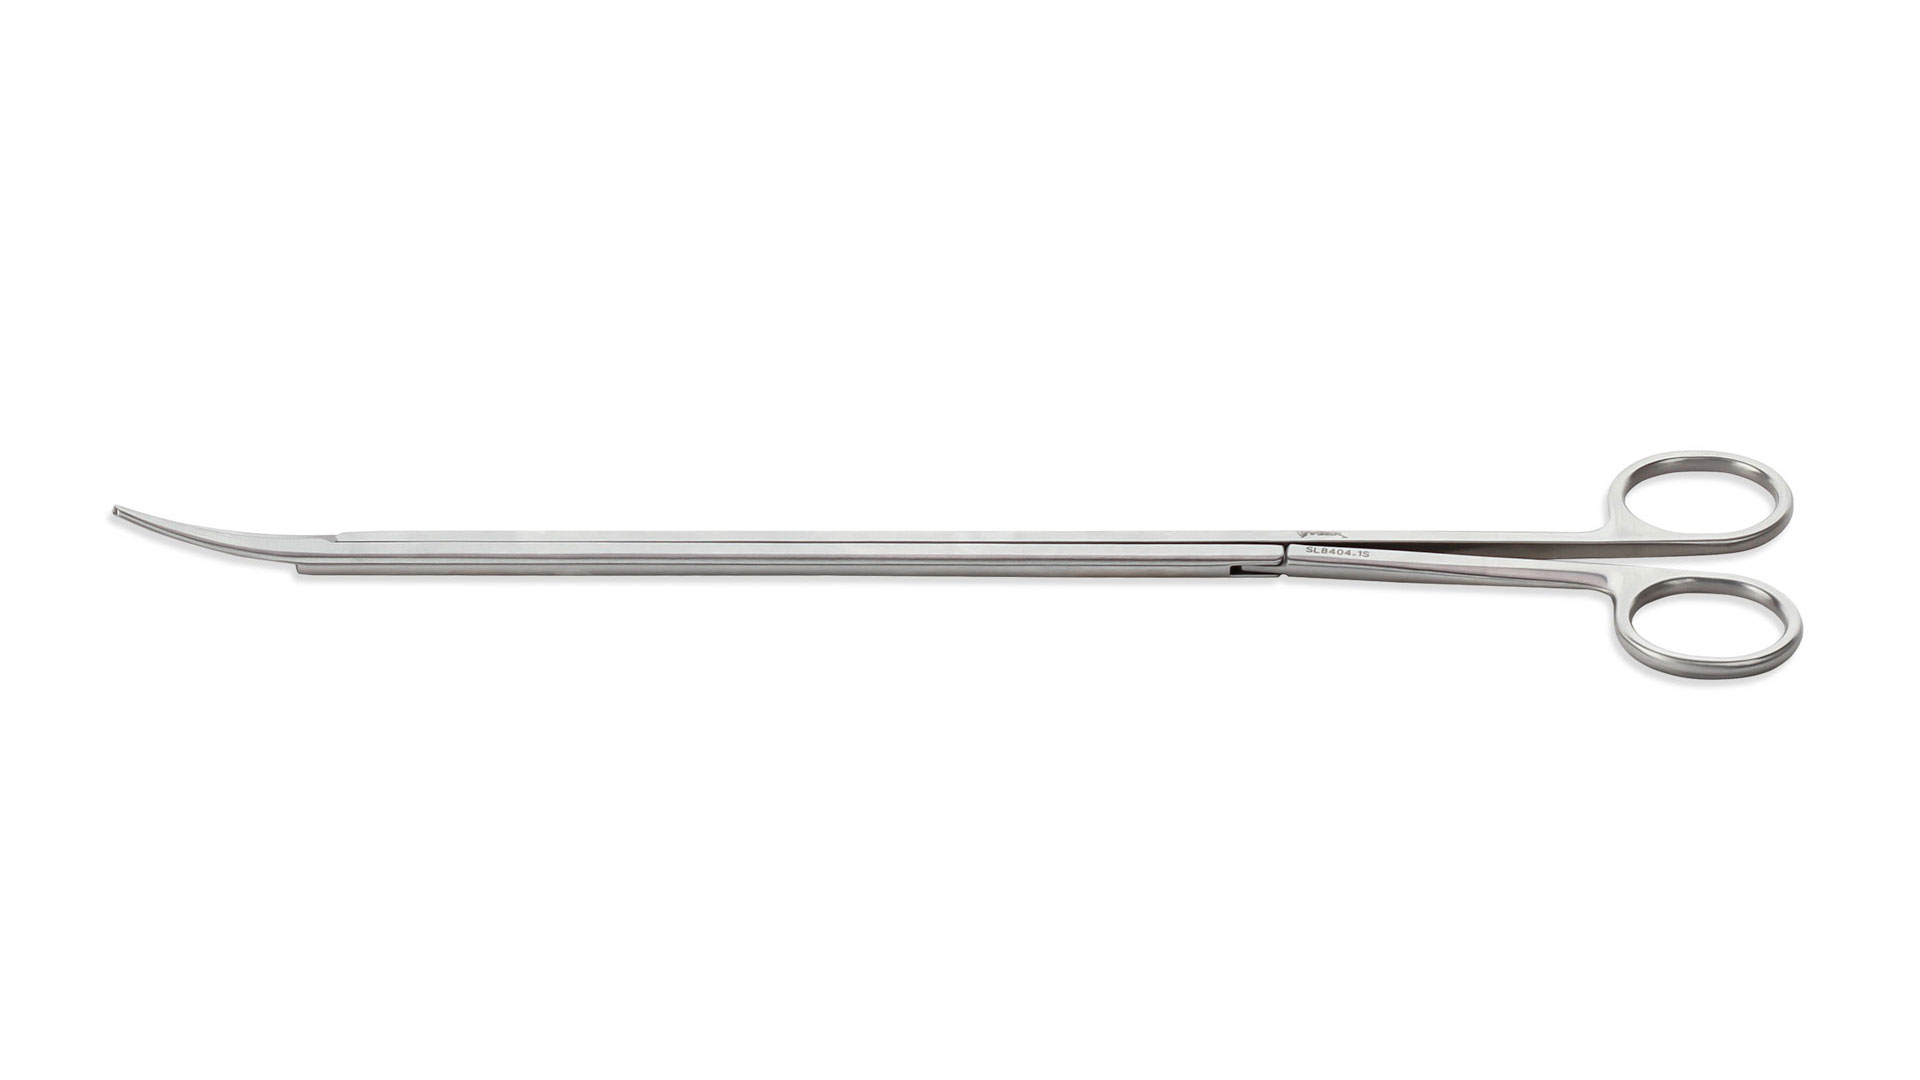 Thoracoscopic Scissors - Curved 3.5cm Razor Edge blades w/Blunt tips